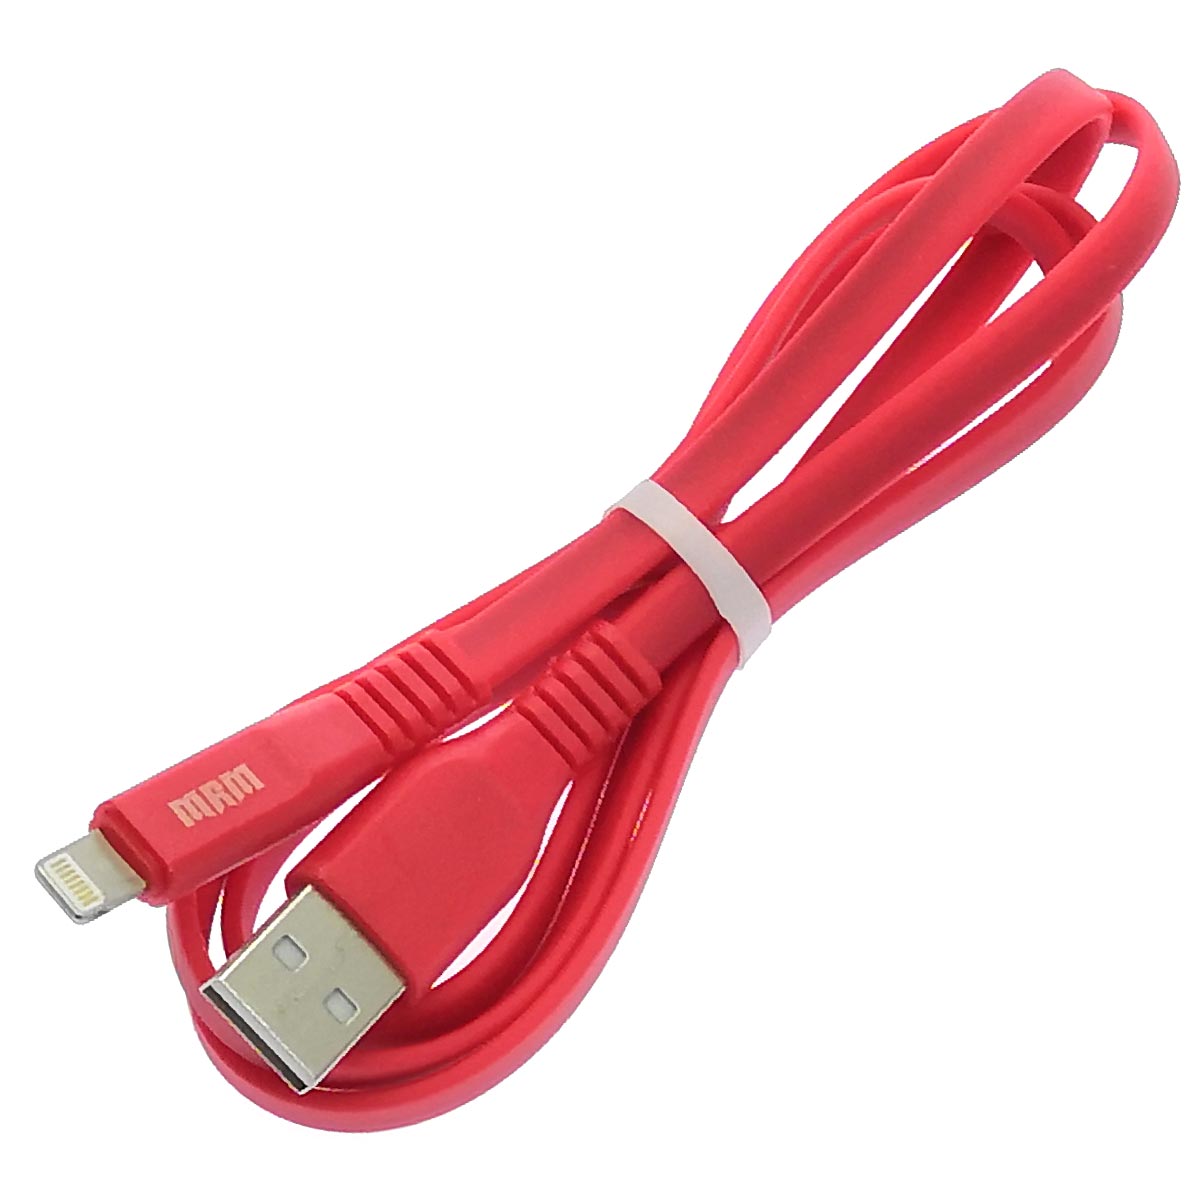 USB Дата кабель MRM RL55i, APPLE Lightning 8 pin, силикон, плоский, длина 1 метр, 3.0 A, цвет красный